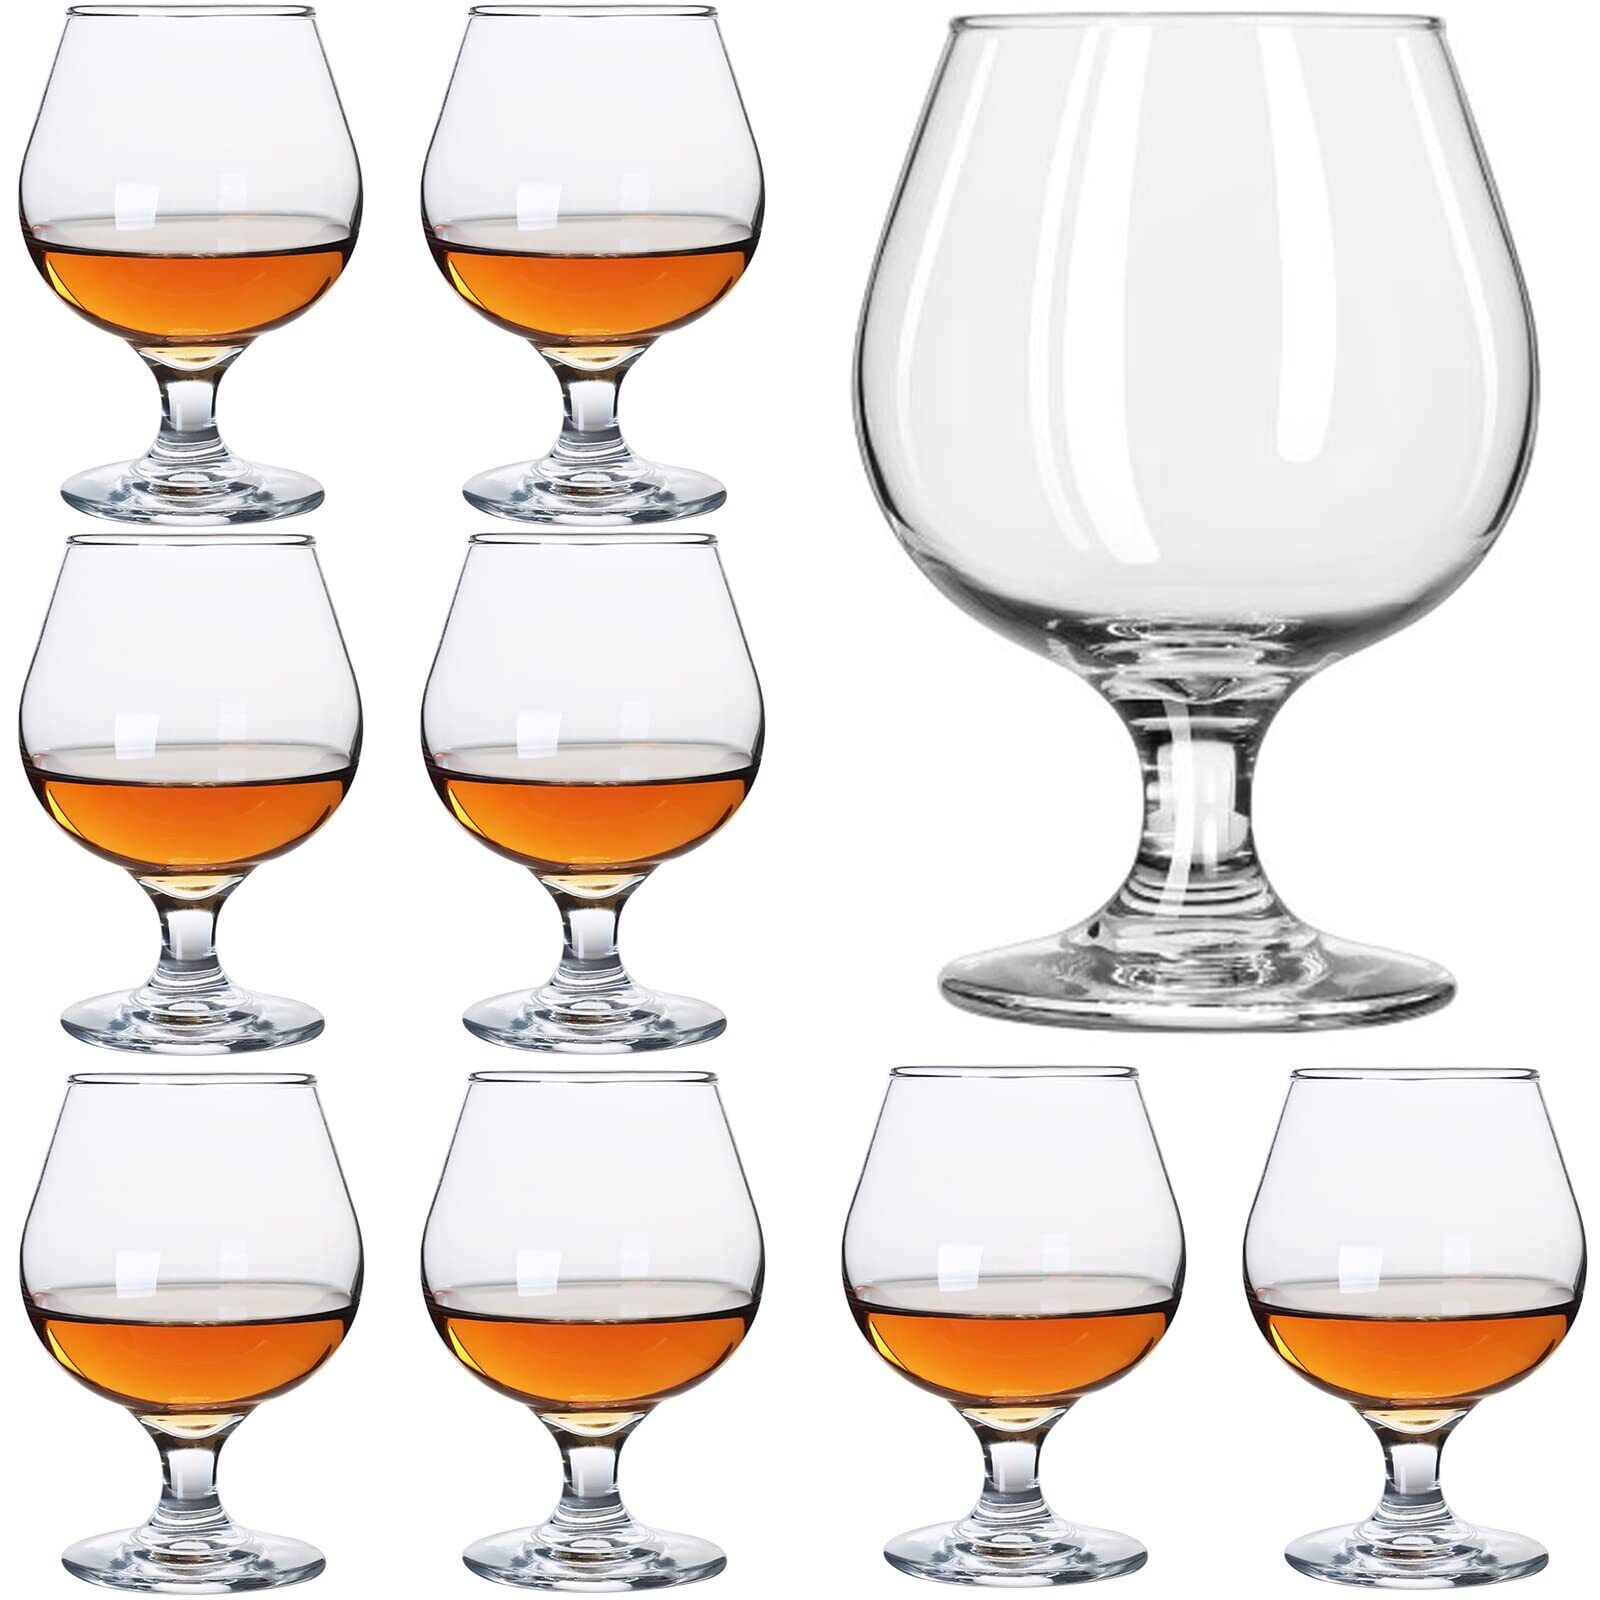 Srgeilzati Snifters Shot Glasses Set of 8 Cute Brandy Cognac Glasses (100ml |...